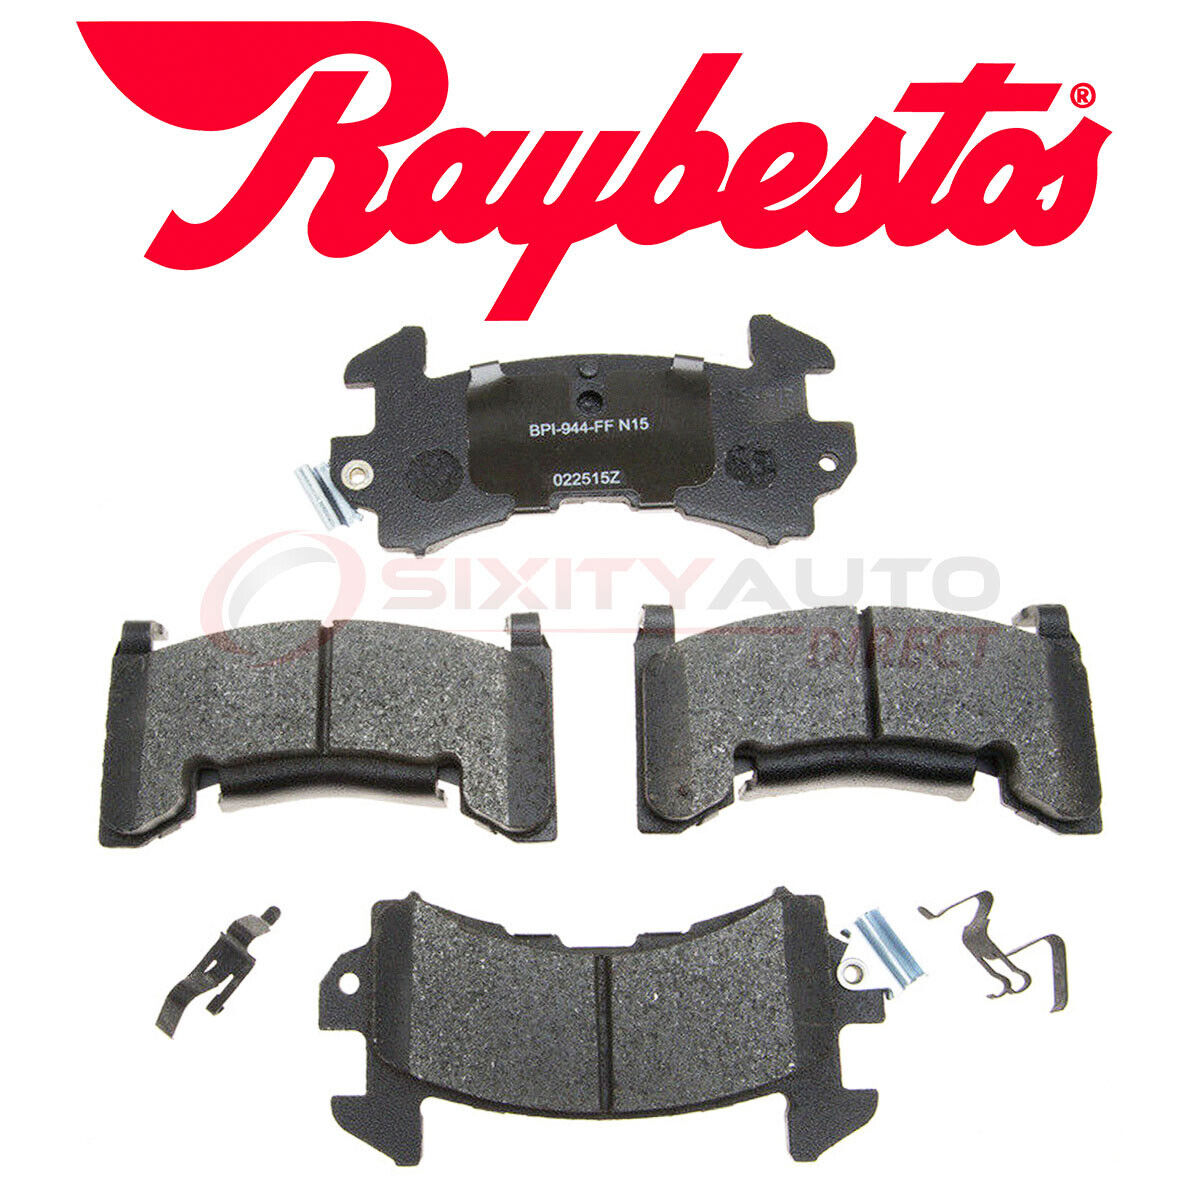 Raybestos Truck Metallic Disc Brake Pads for 1978-1987 Oldsmobile Cutlass or